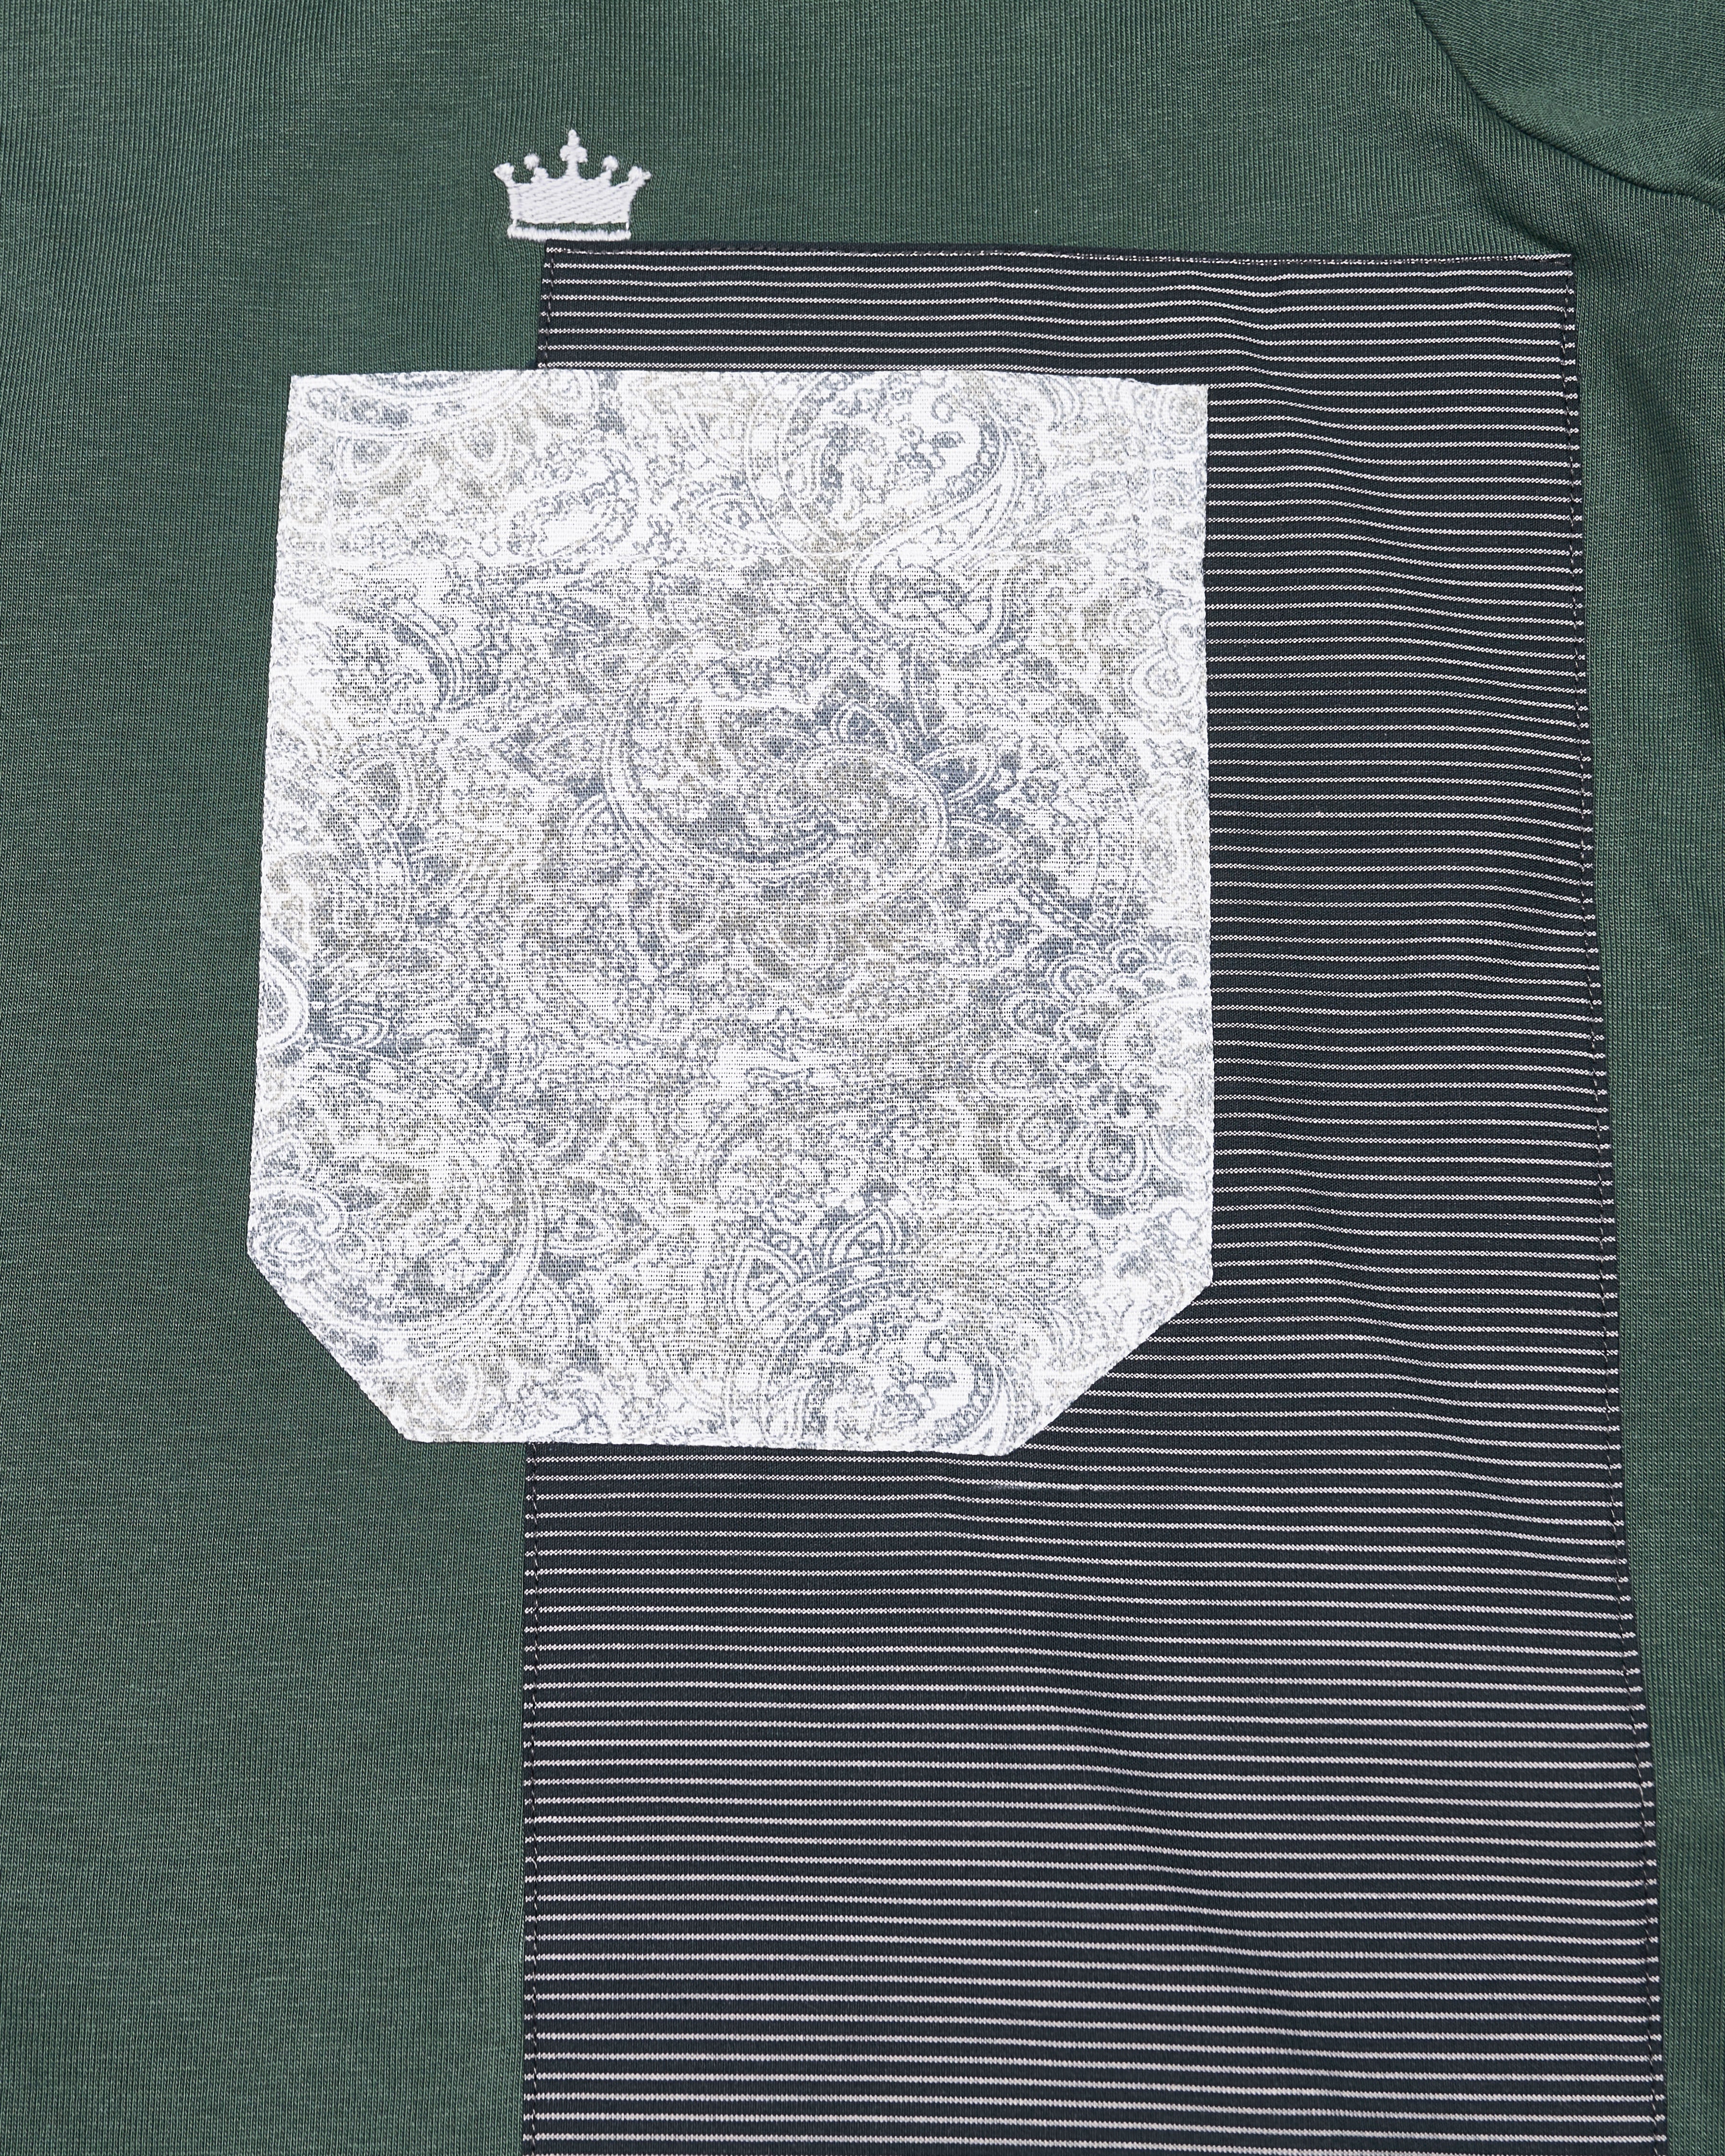 Asparagus Green with  PatchWork with Patch Pocket Premium Organic Cotton Designer T-shirt TS016-W02-S, TS016-W02-M, TS016-W02-L, TS016-W02-XL, TS016-W02-XXL